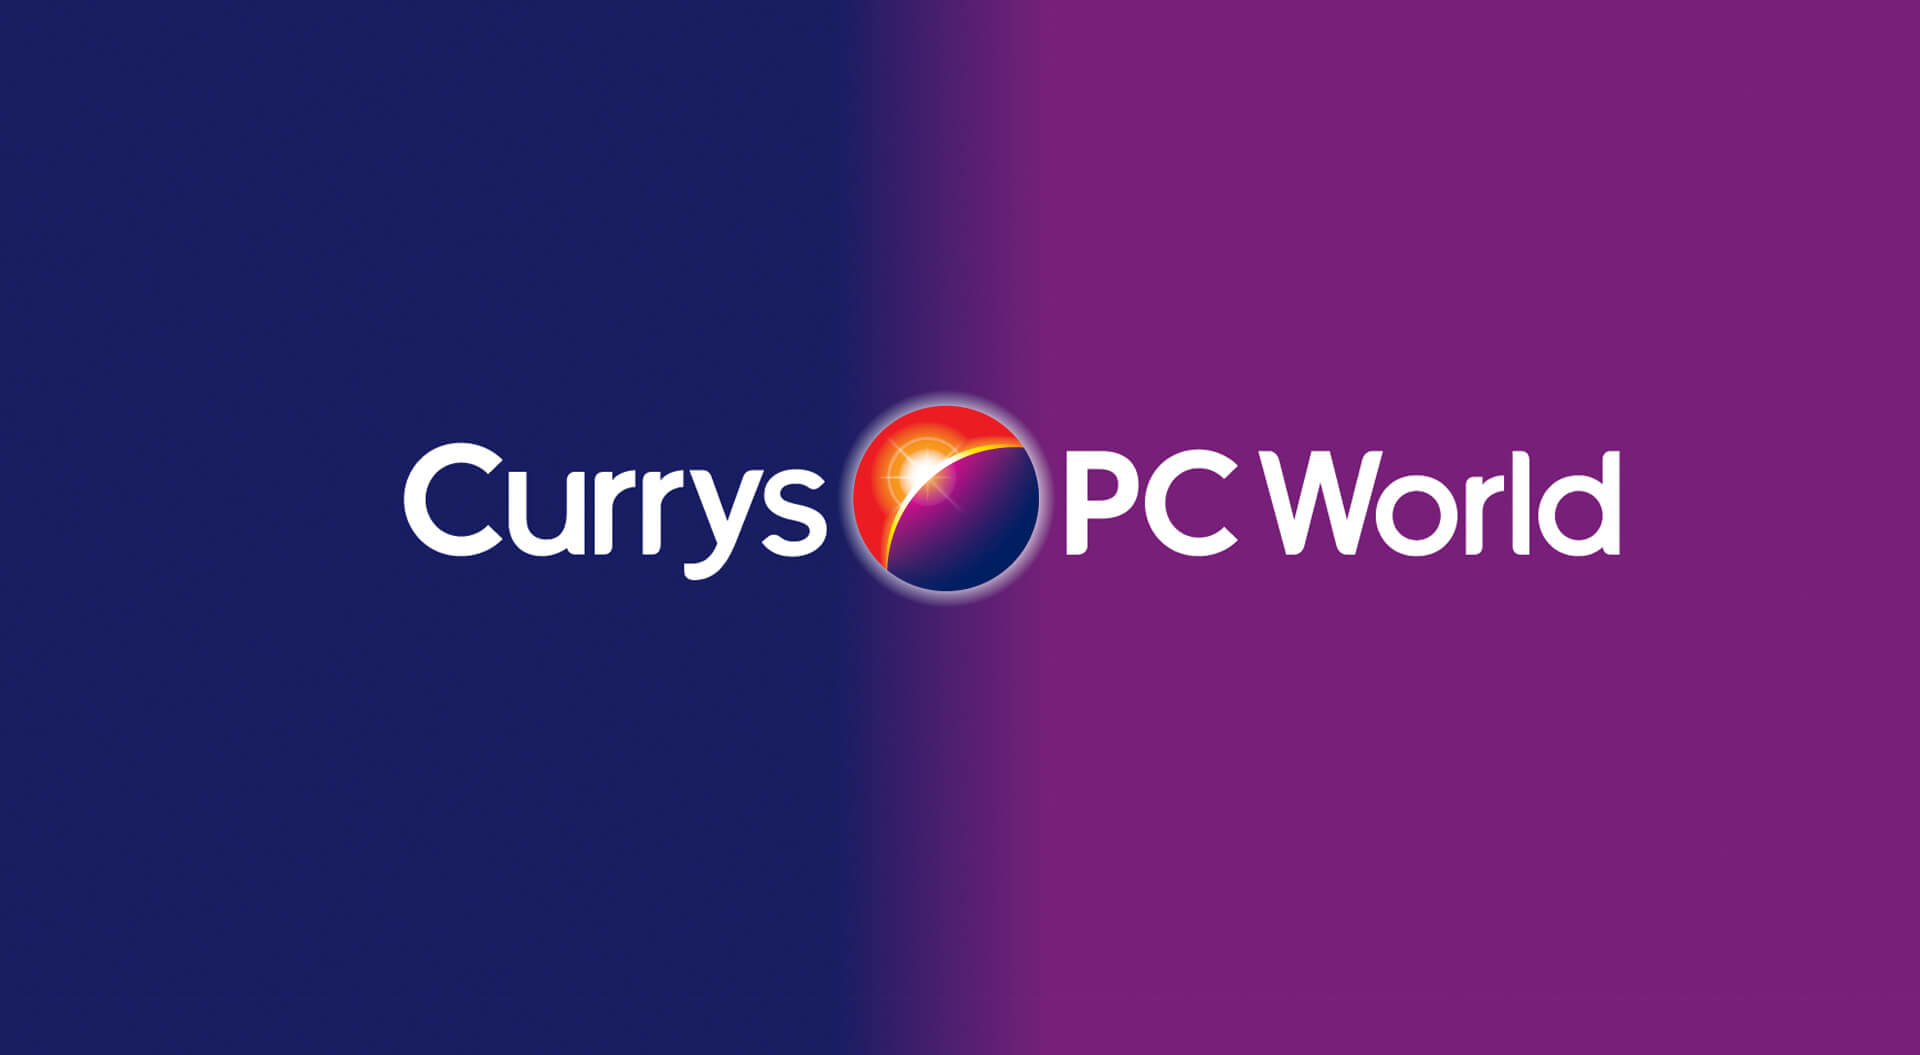 Currys PC World innovative corporate brand identity